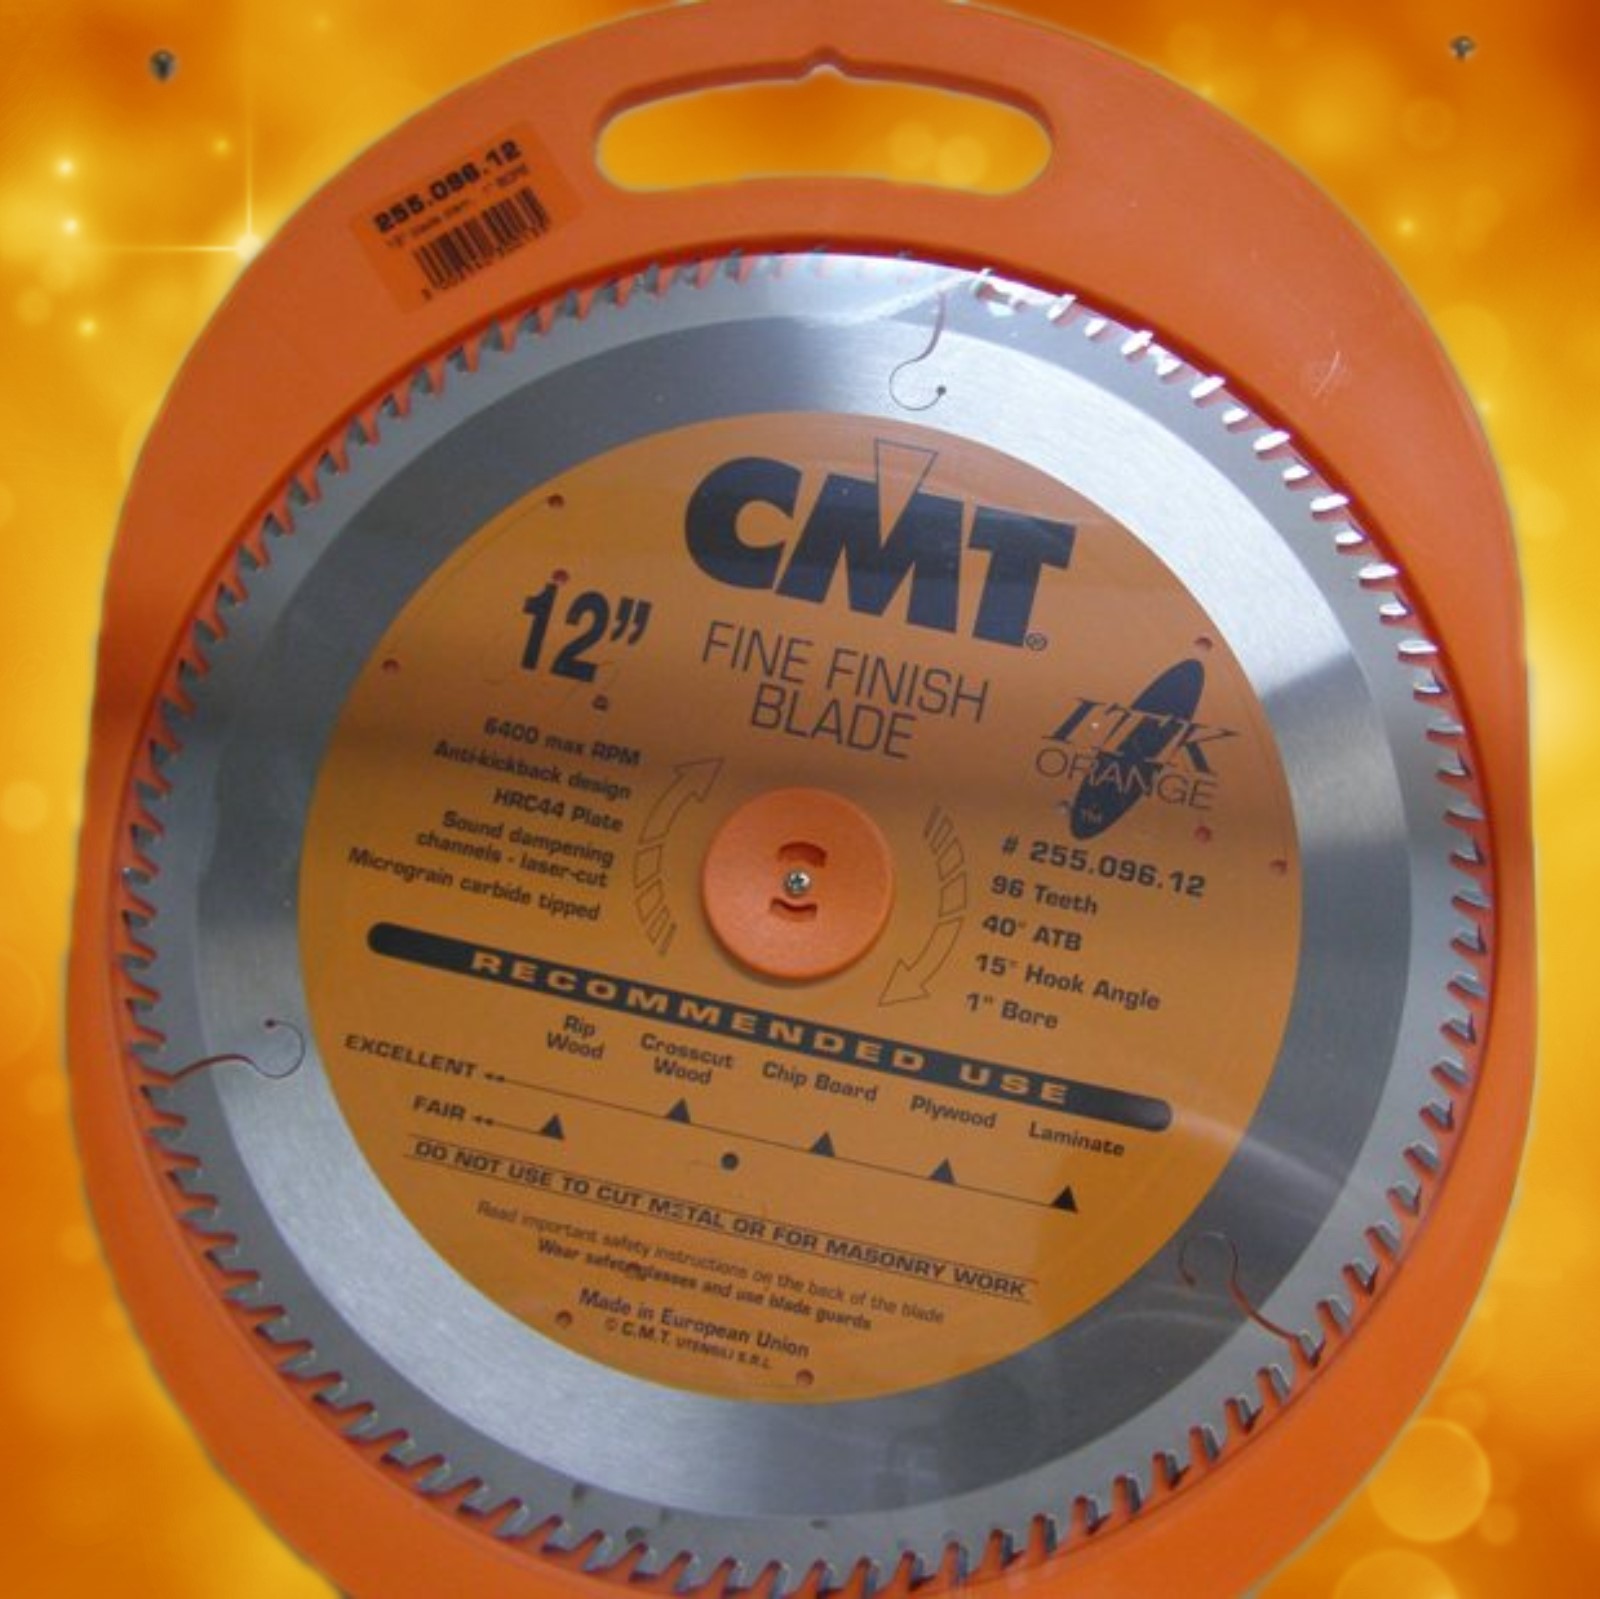 CMT ITK Fine Finish Blade, 12" diameter 255.096.12